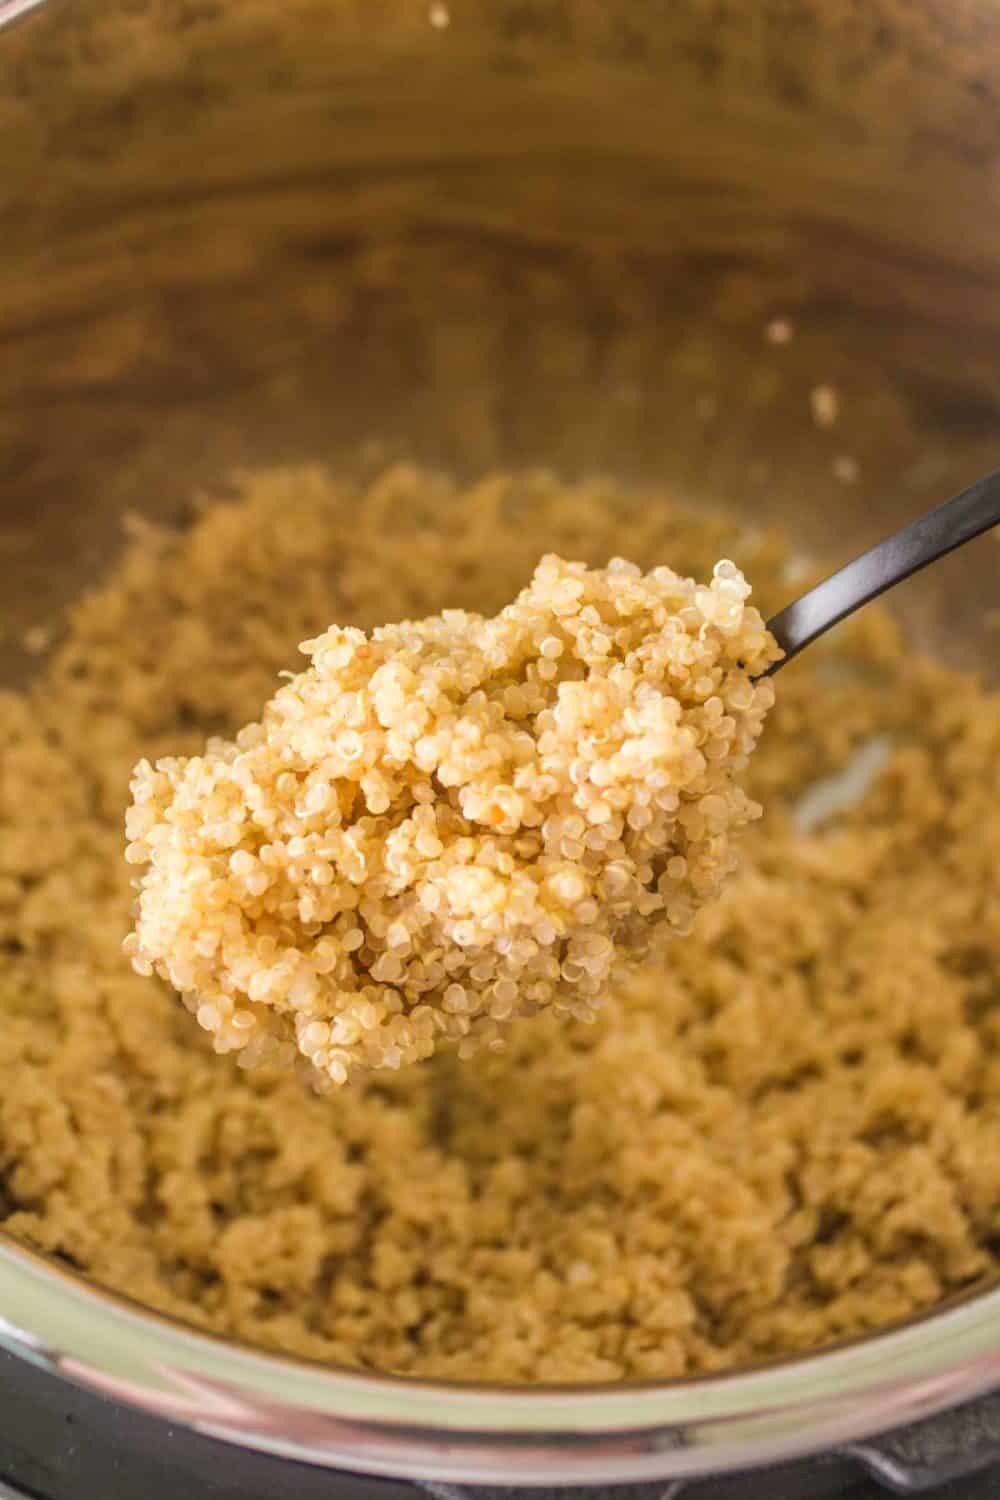 Instant Pot Quinoa — Bless this Mess